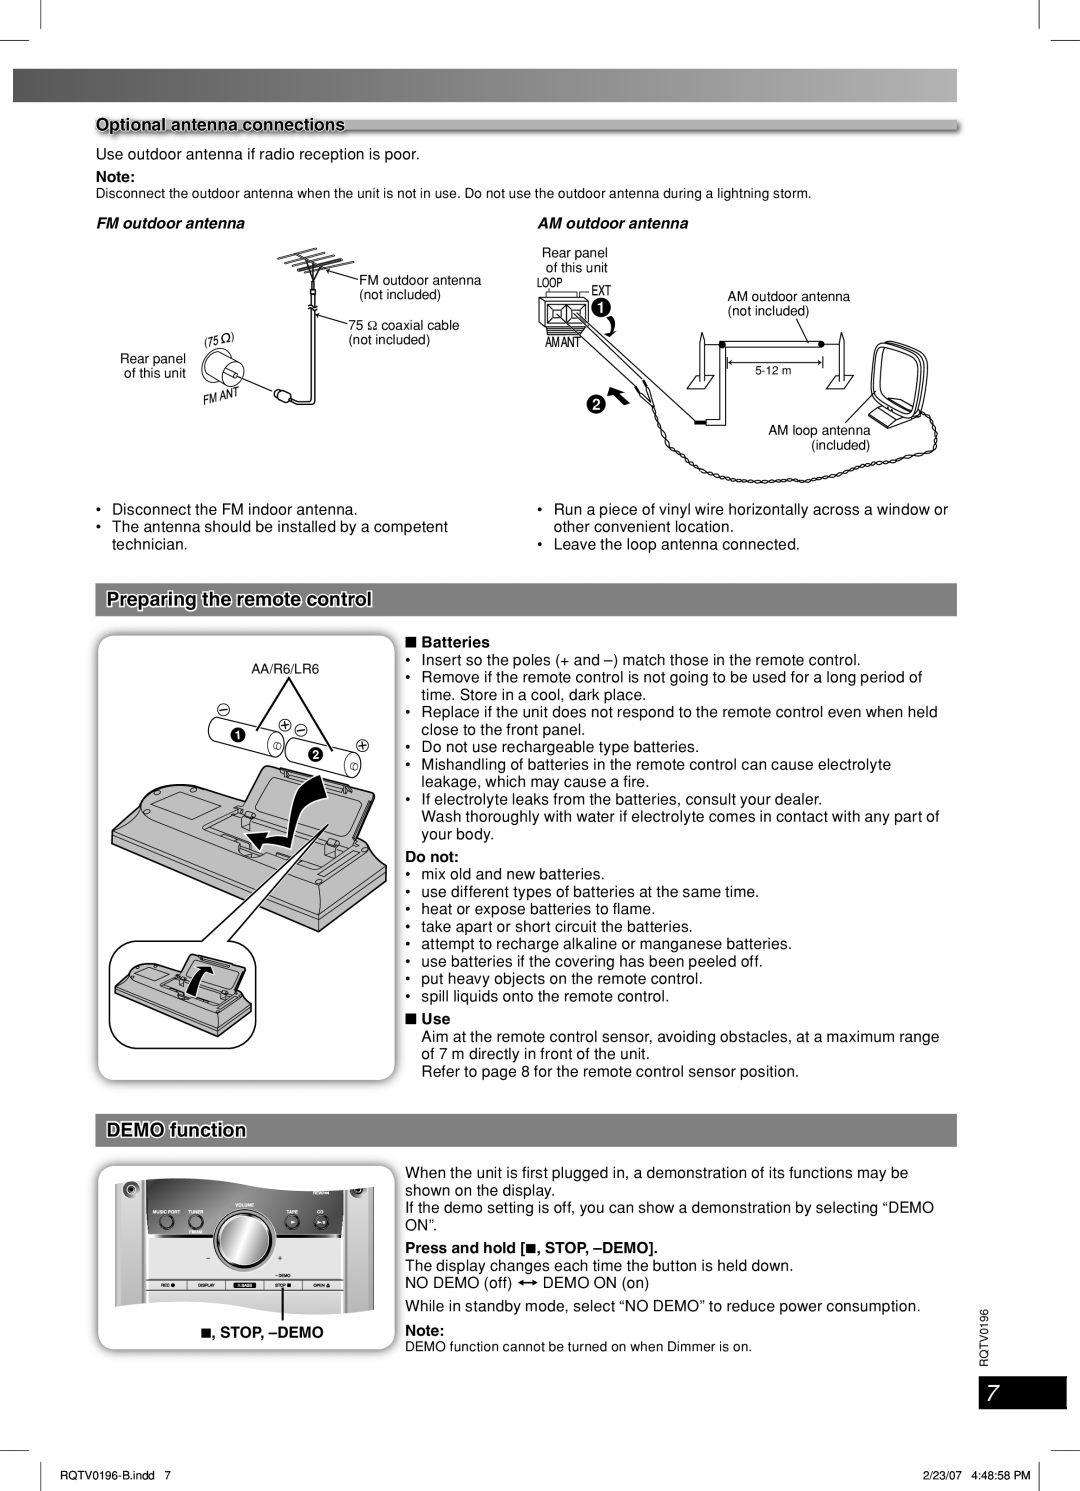 Panasonic SC-AK350 Preparing the remote control, DEMO function, Français Lang - Lang, Deutsch Dansk, FM outdoor antenna 